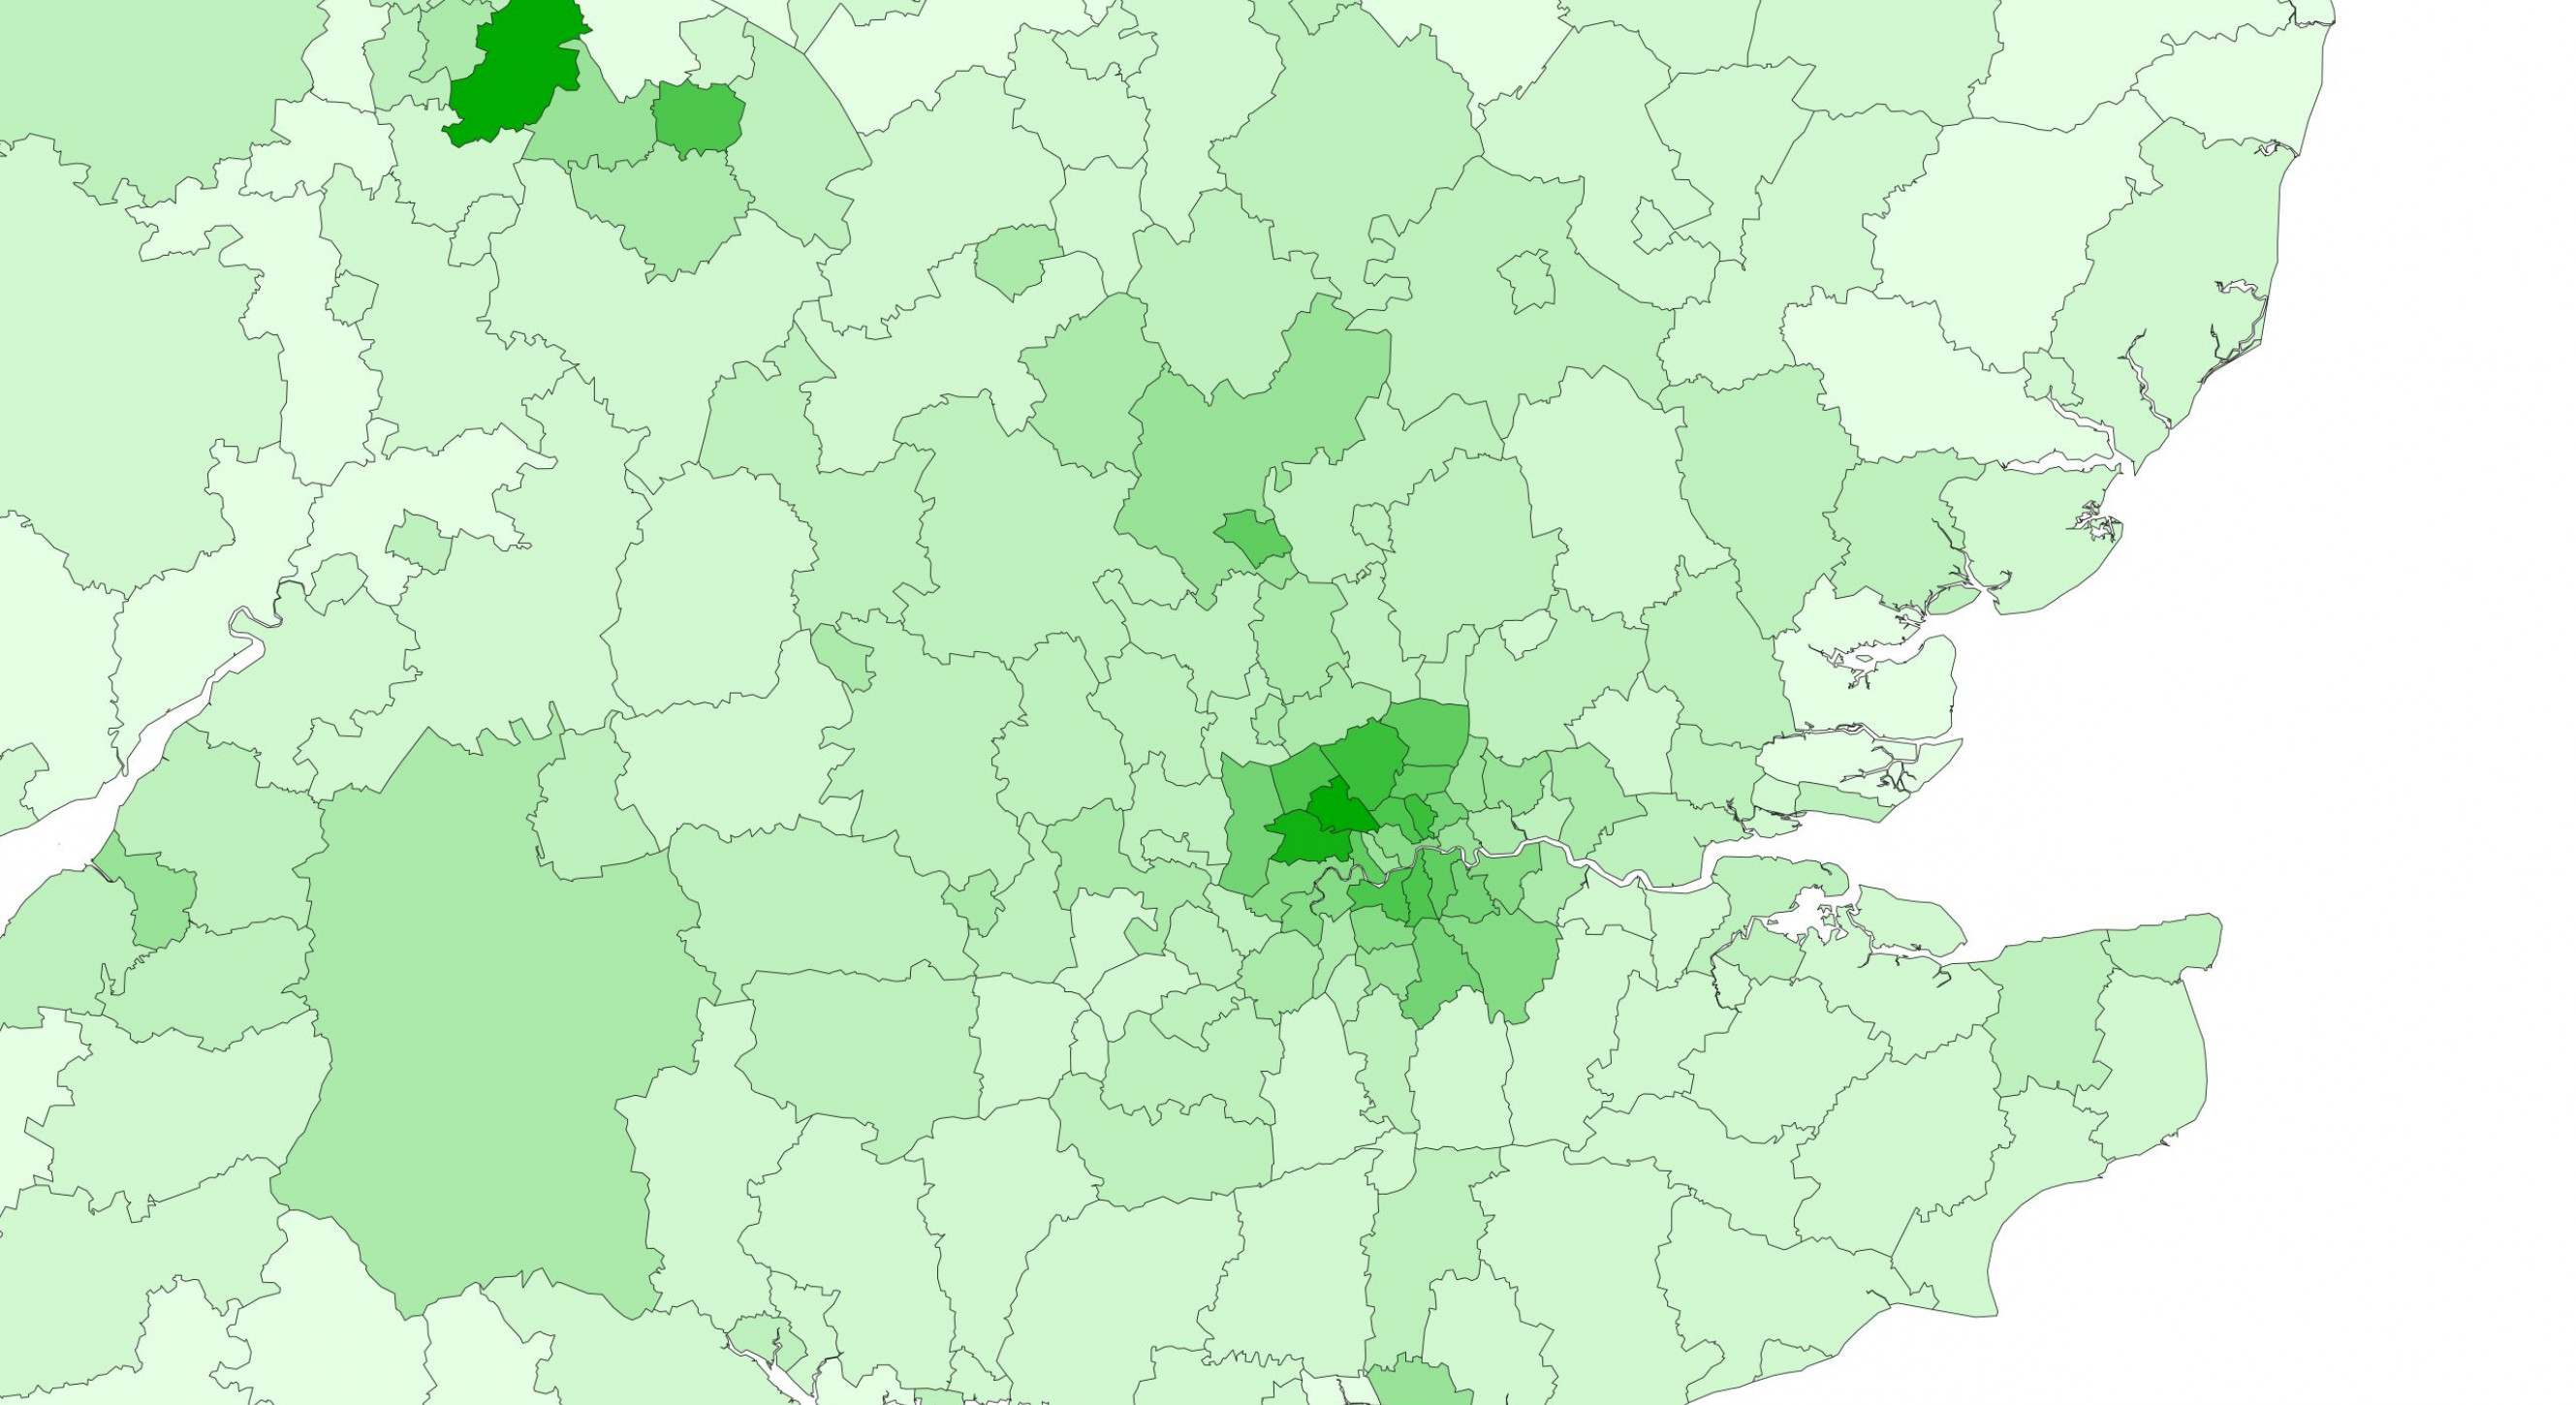 London and Birmingham white Irish population